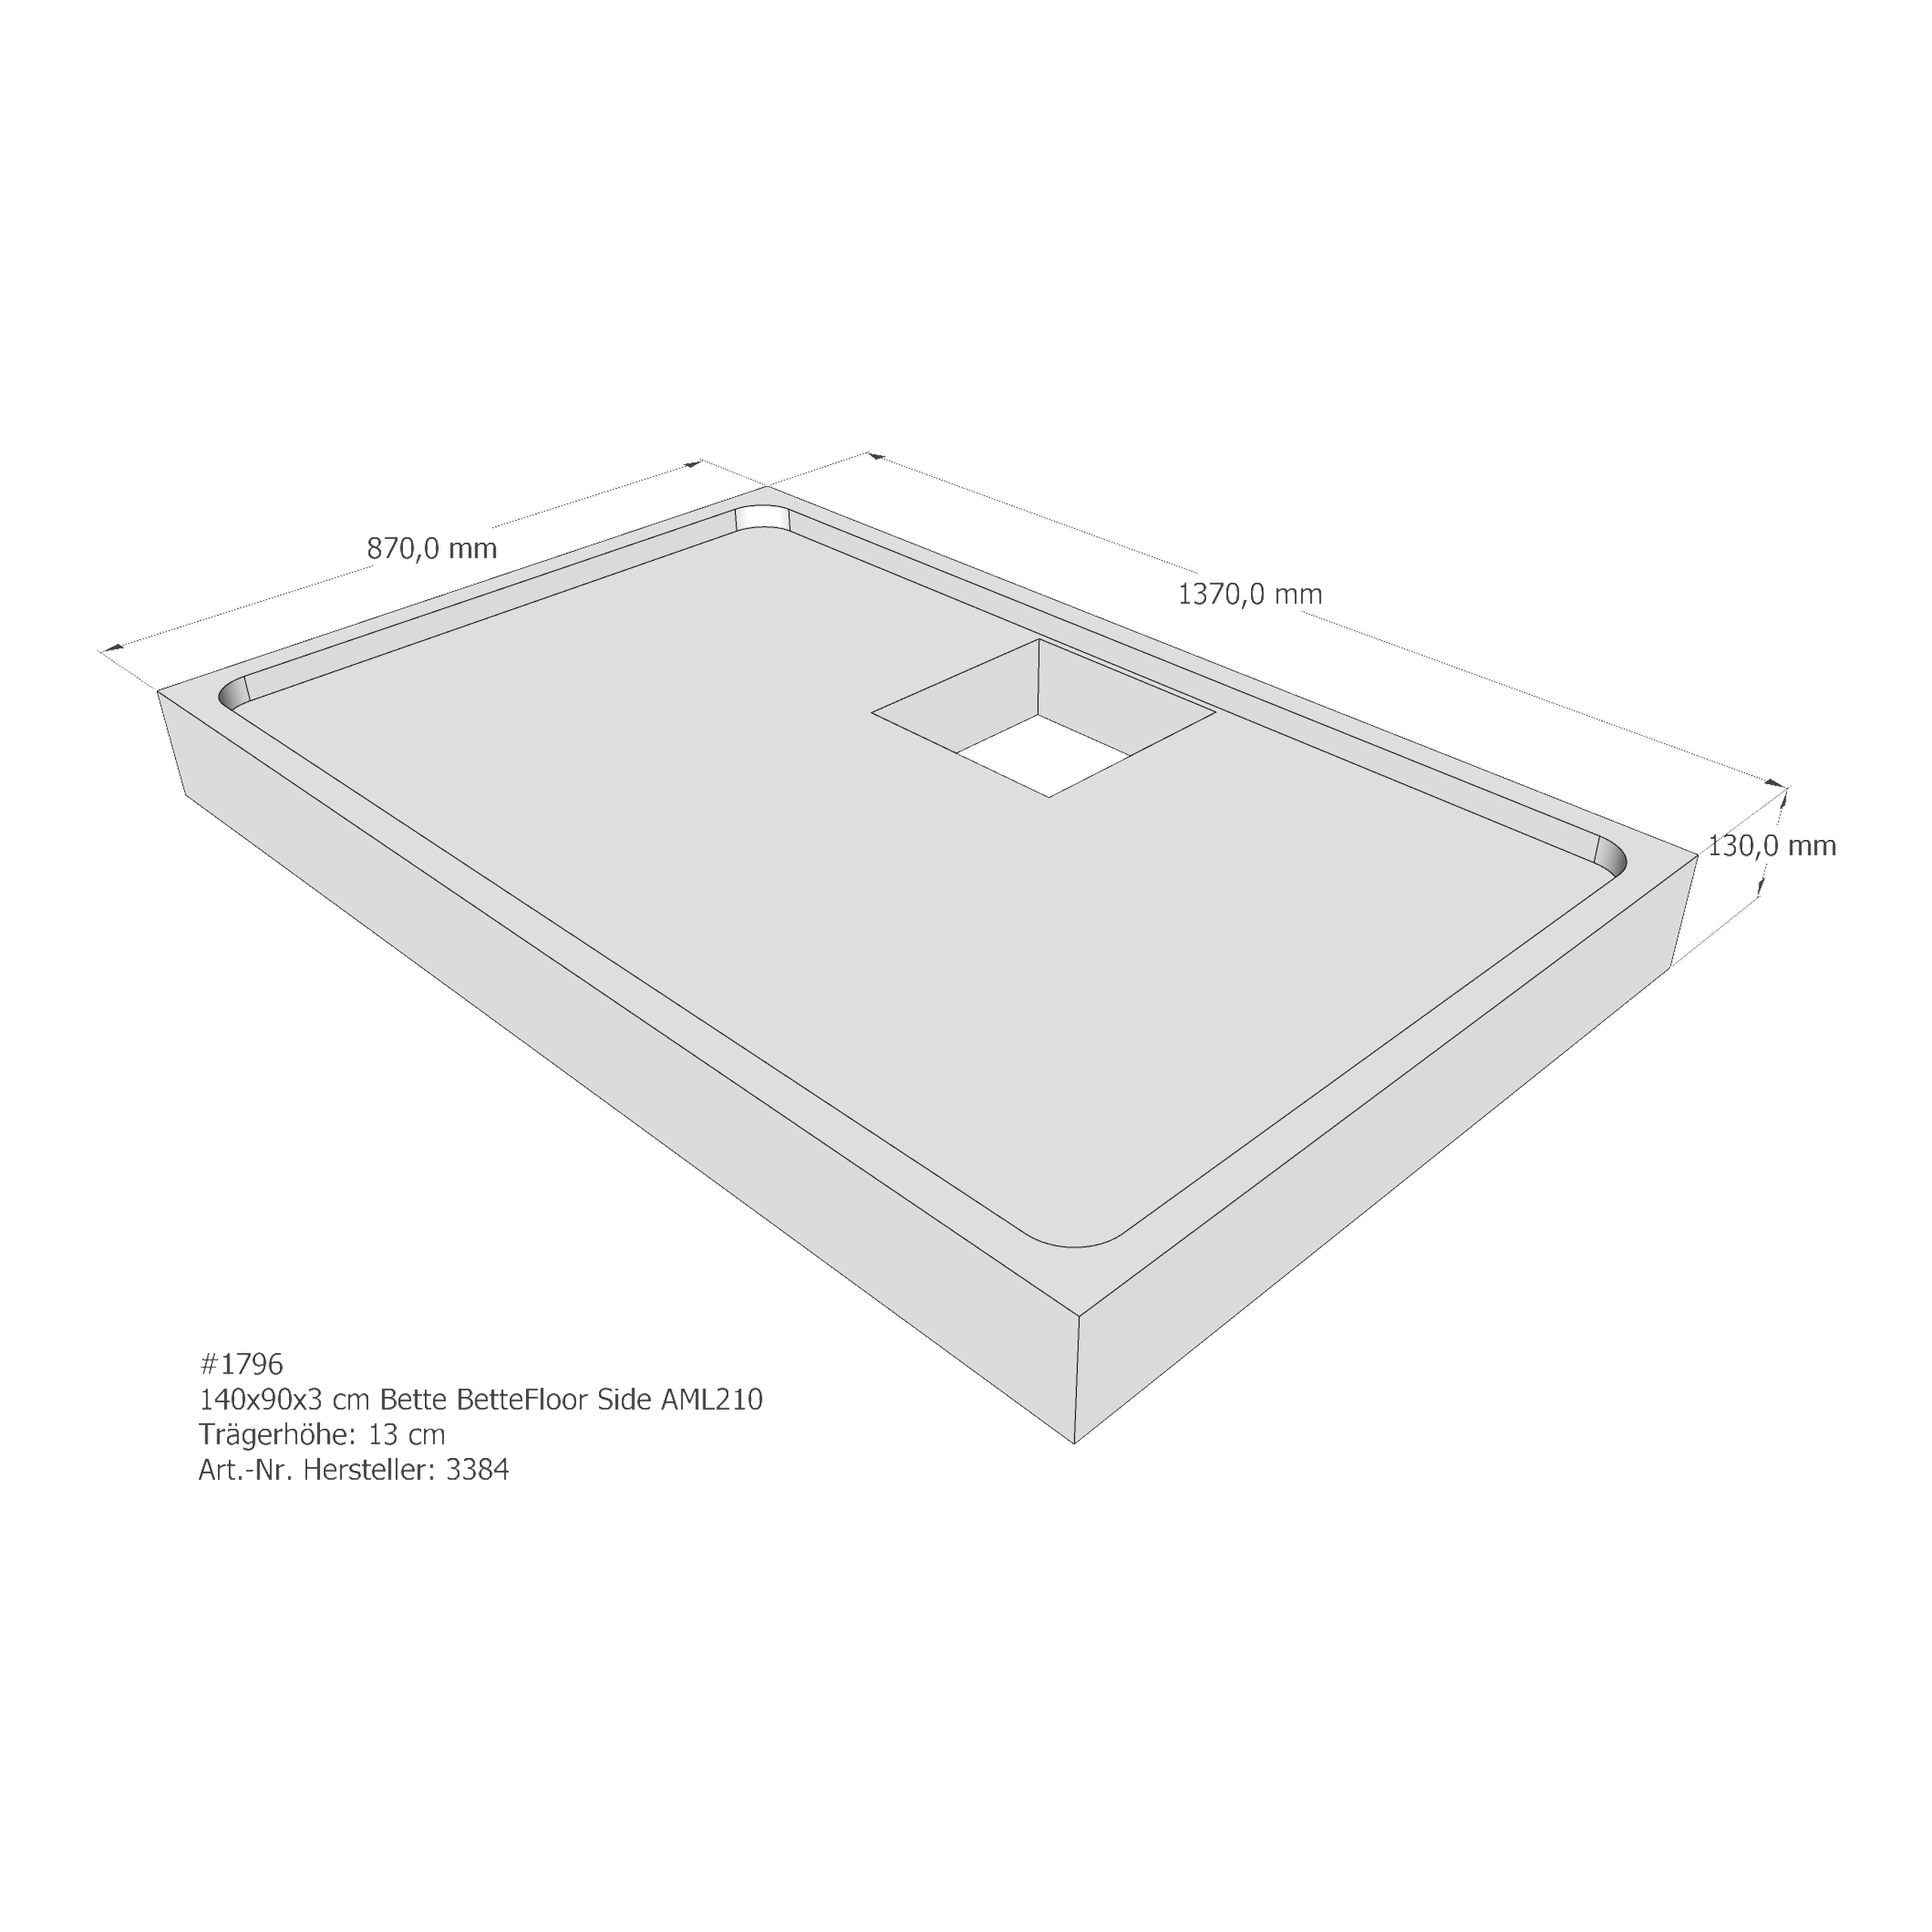 Duschwannenträger für Bette BetteFloor Side 140 × 90 × 3 cm